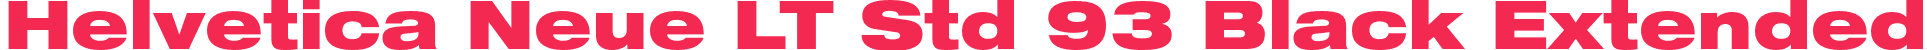 Helvetica Neue LT Std 93 Black Extended